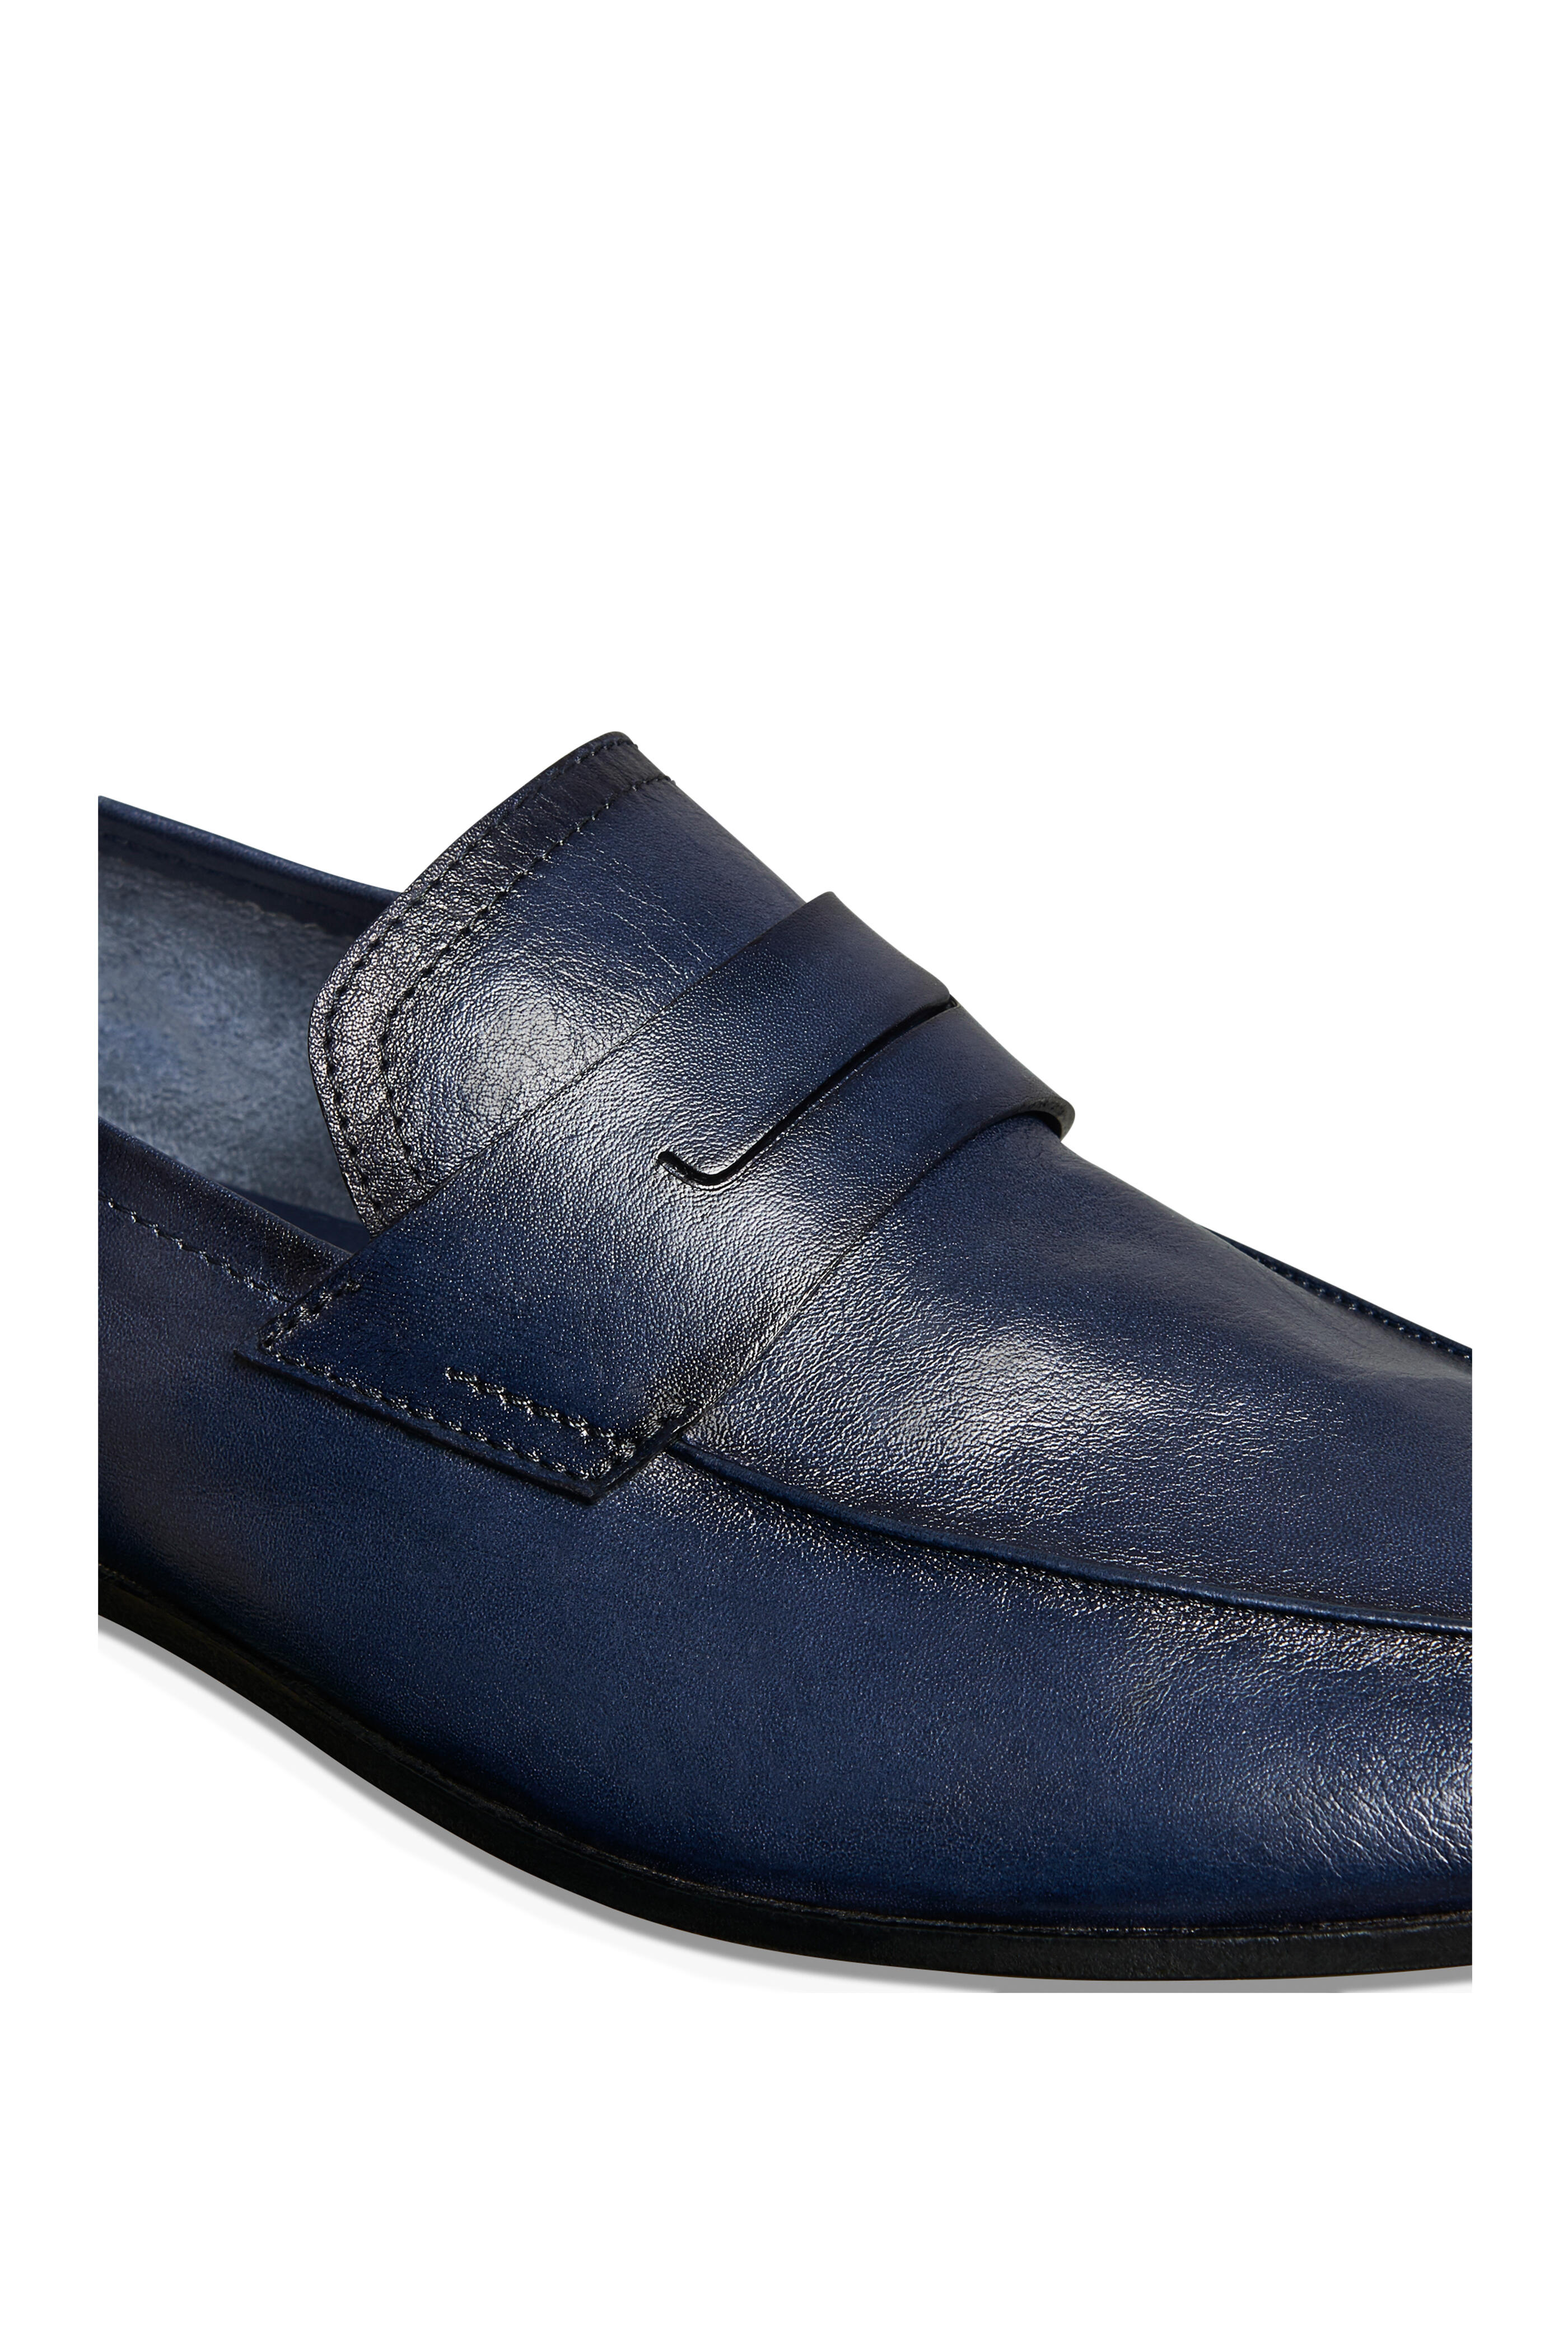 Berluti - Lorenzo Rimini Navy Blue Kangaroo Leather Loafer